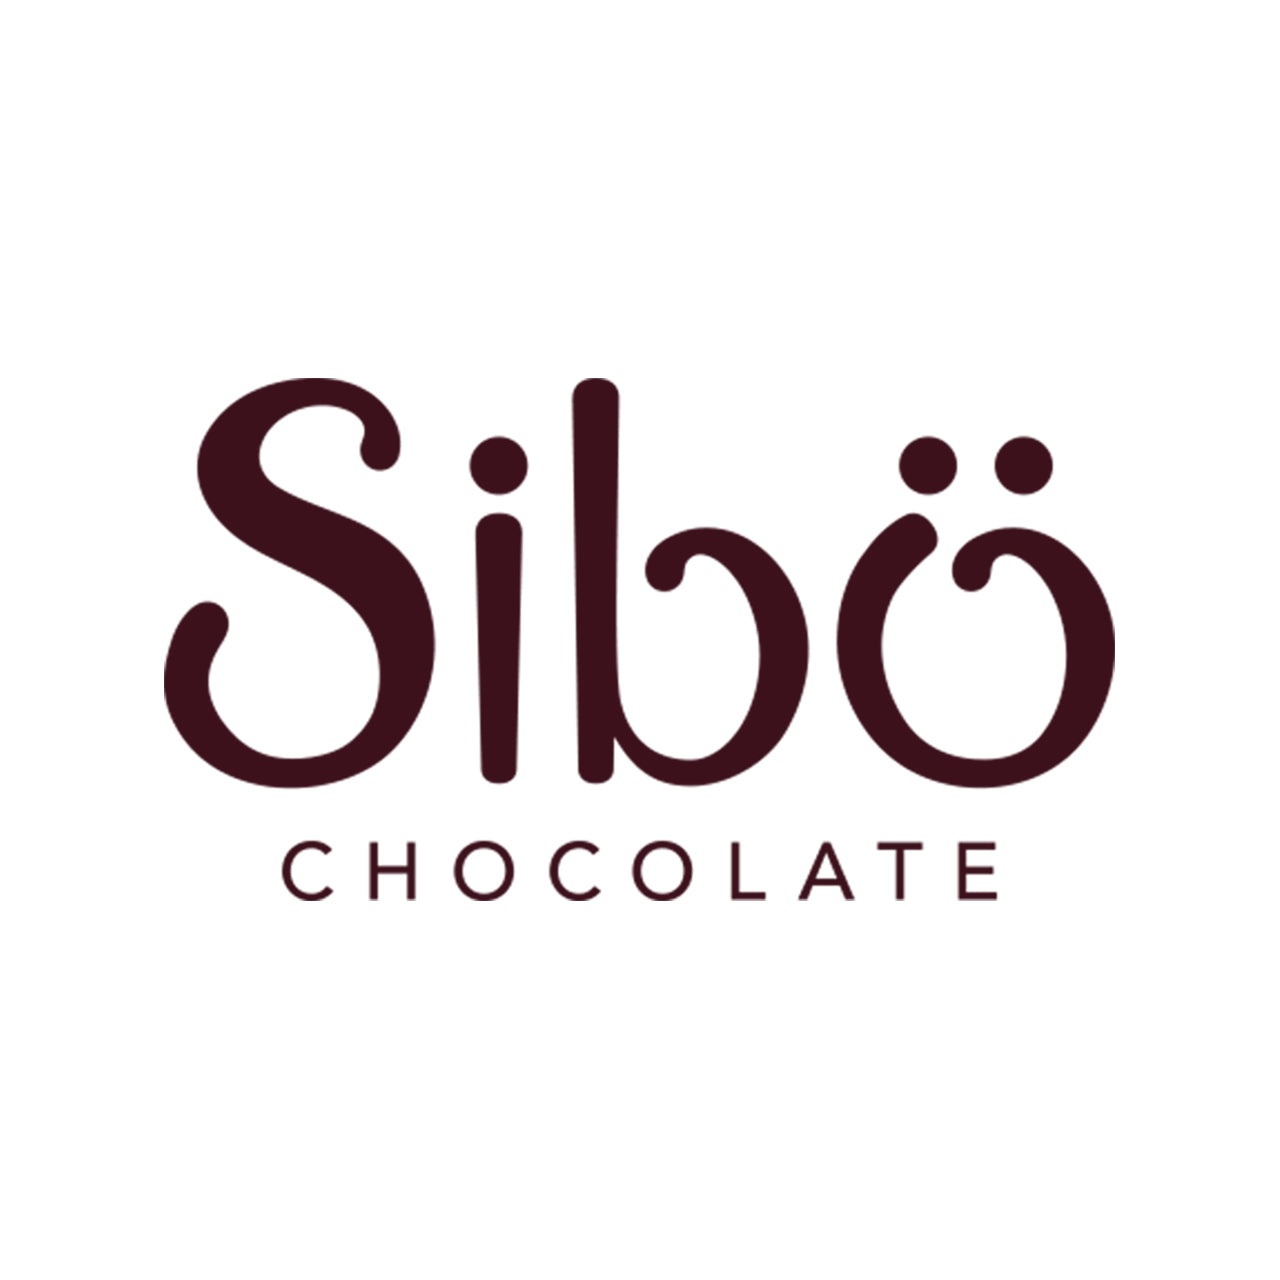 Sibu Chocolate シブチョコレート　アーモンド＆シナモン　ミルクチョコレートカバー(カカオ45％)